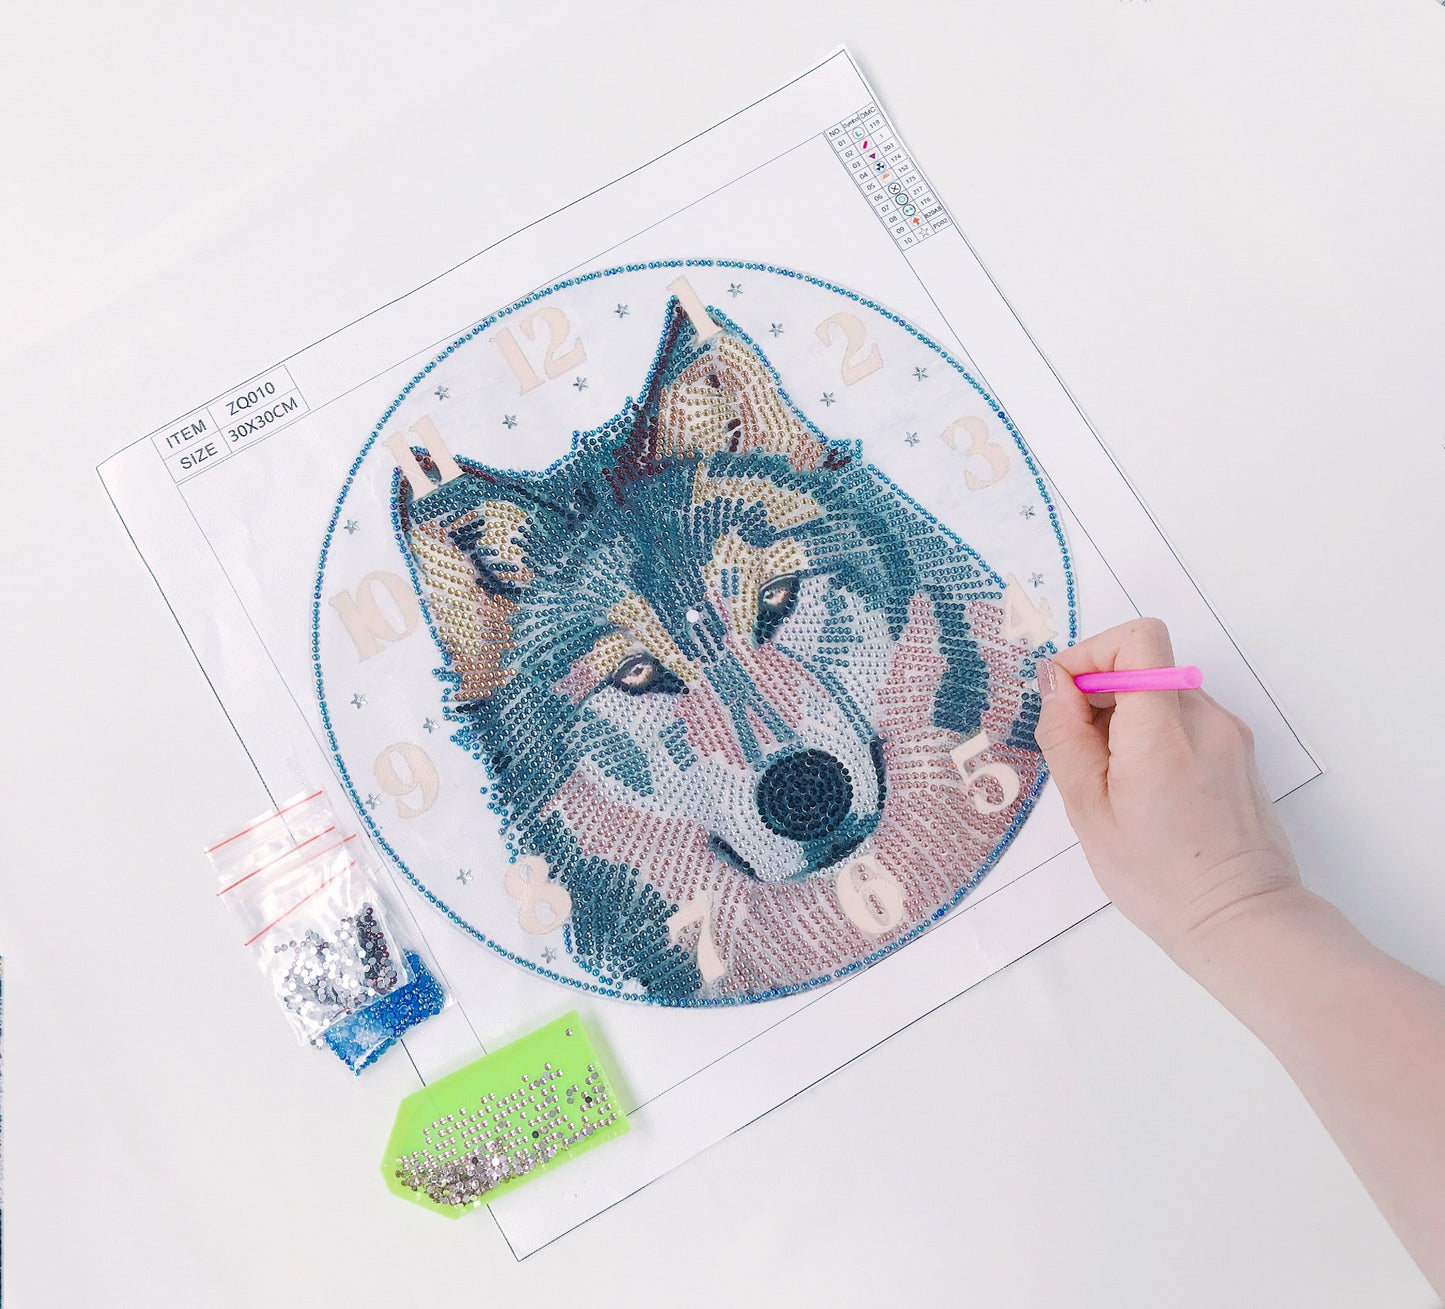 Wolf clock | Special Shaped Diamond Painting Kits